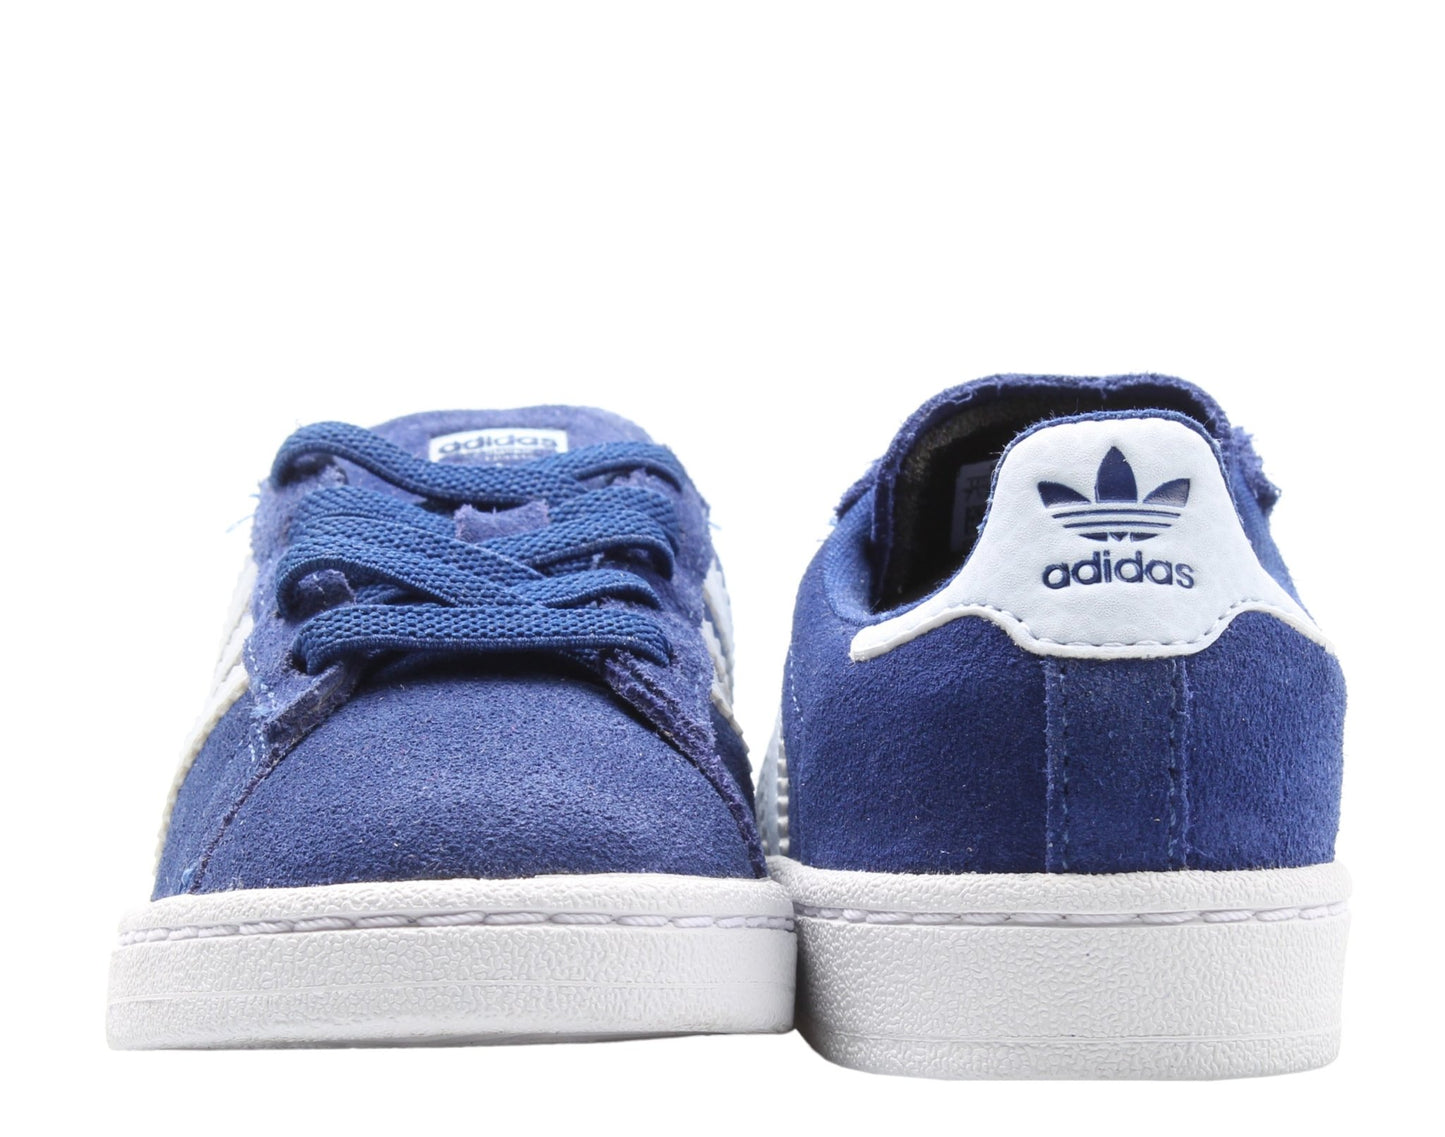 Adidas Originals Campus EL I Infant Blue/White Little Kids Casual Shoes B41961 - Becauze